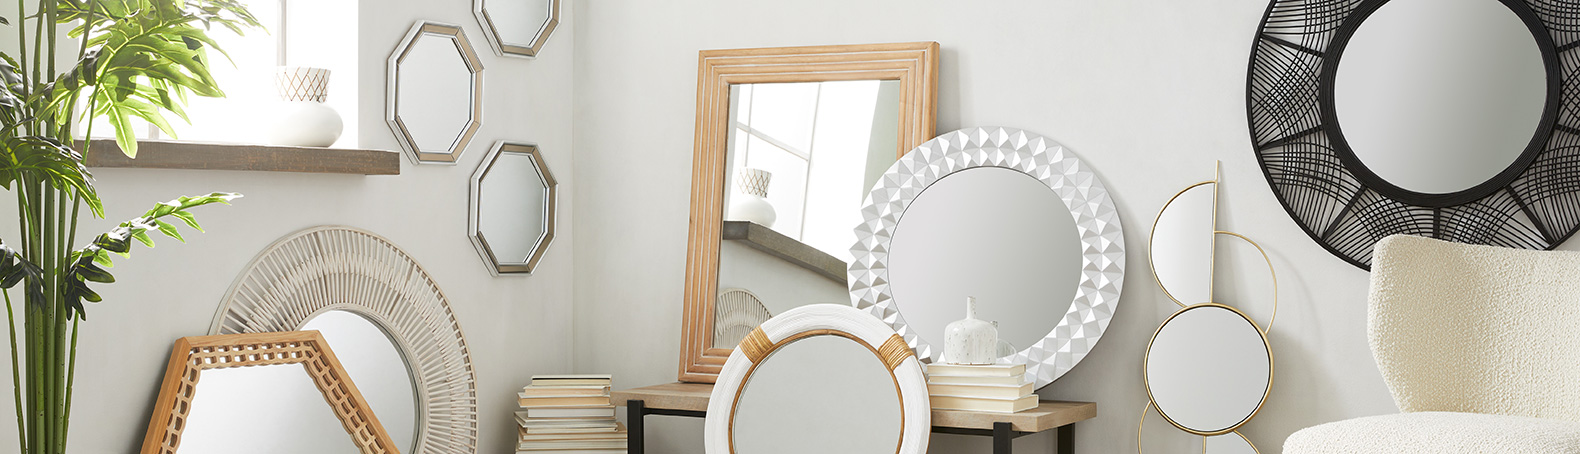 Buy Decorative Accent Mirrors Online in Philadelphia - Furniture Mecca